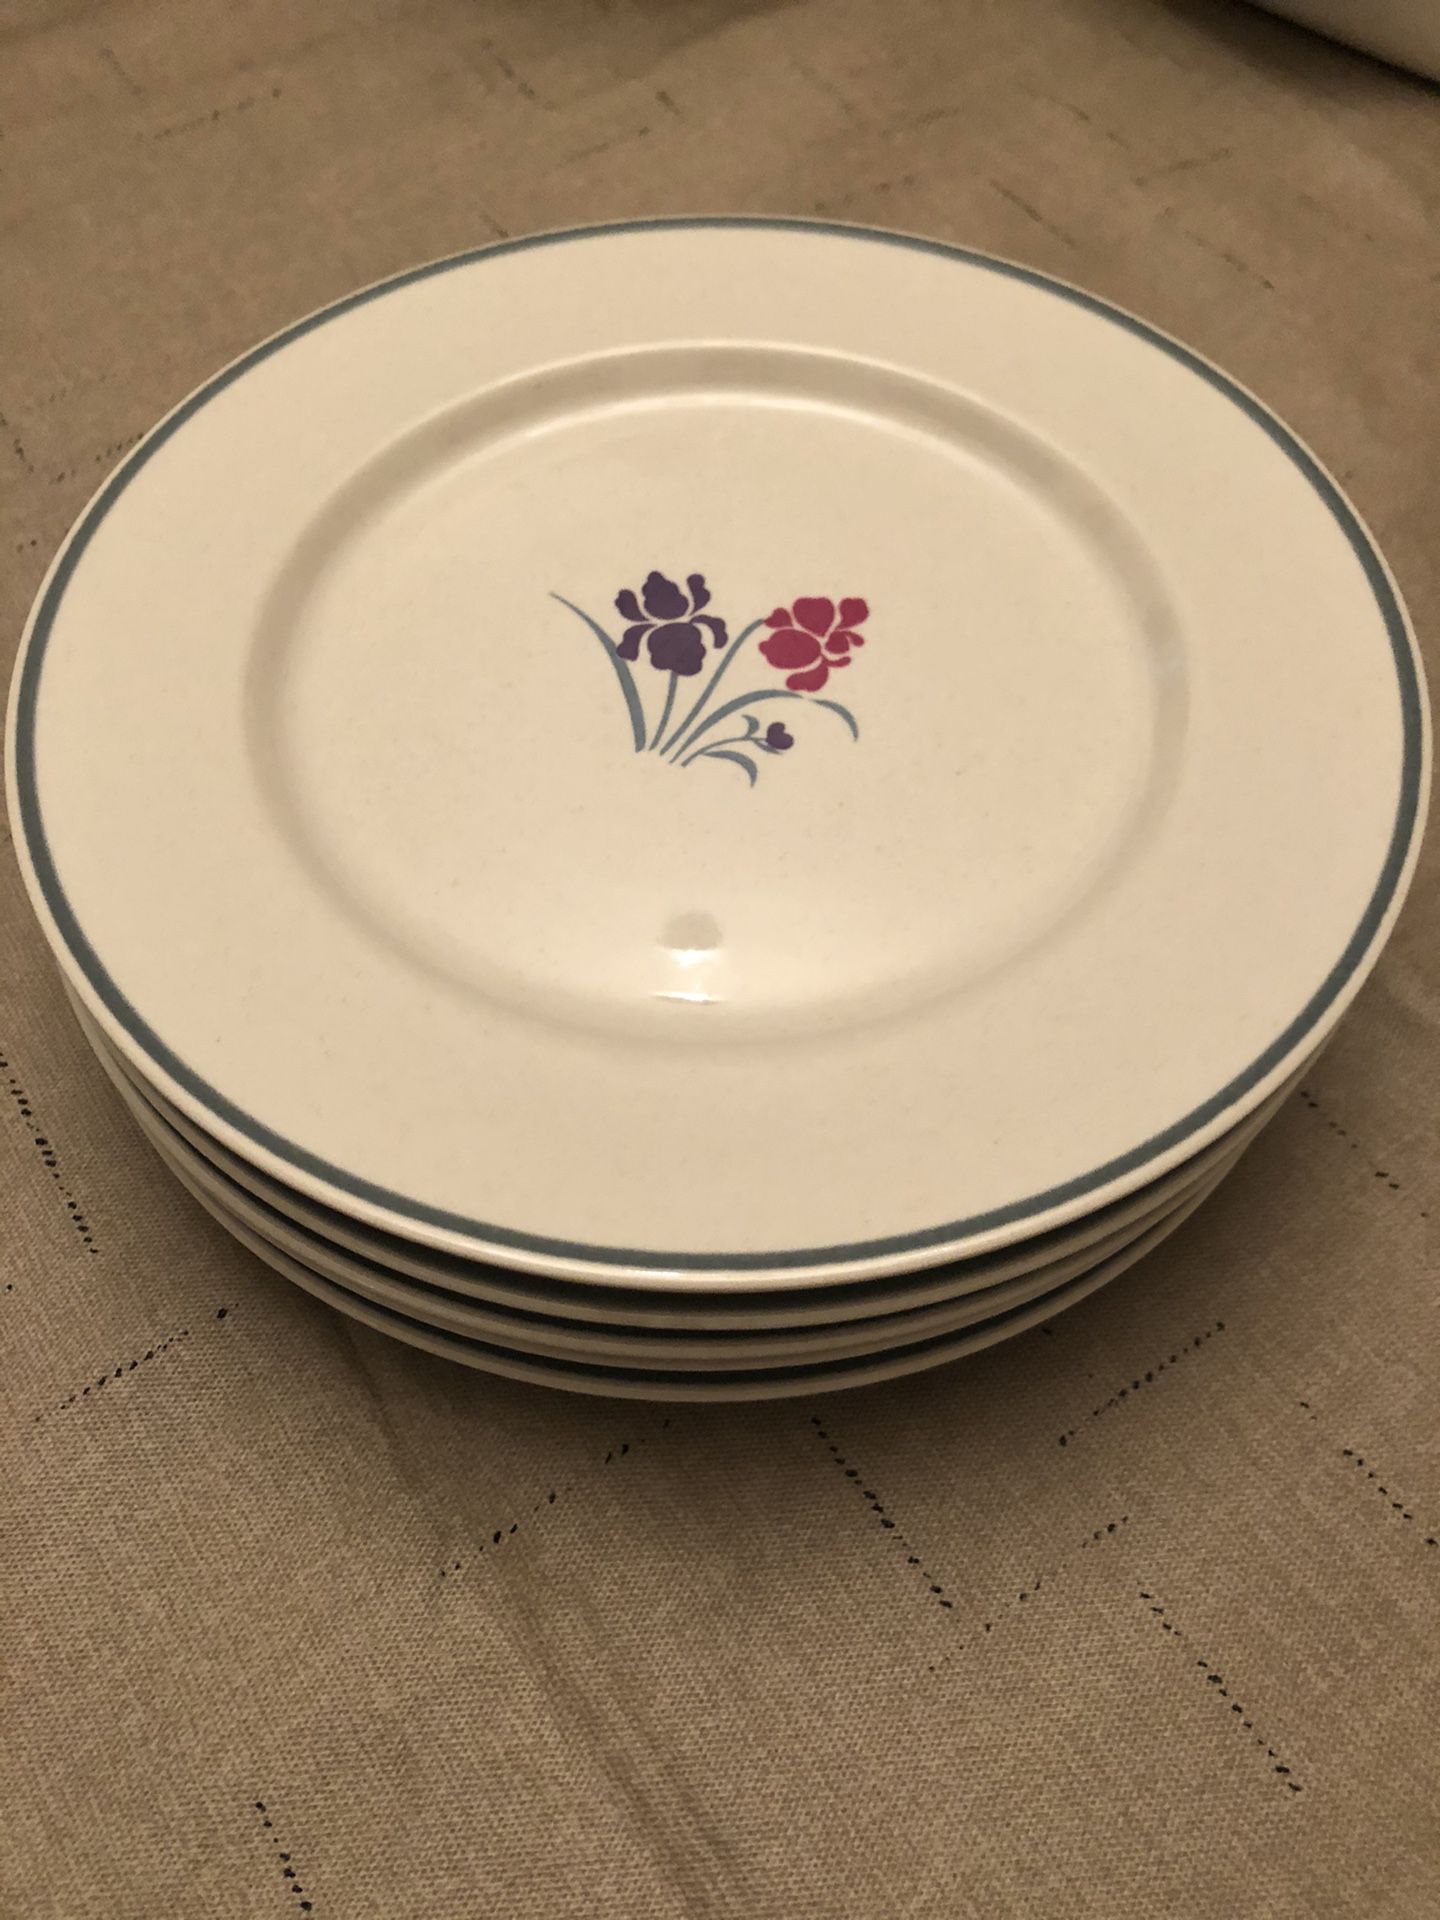 (5) Plates